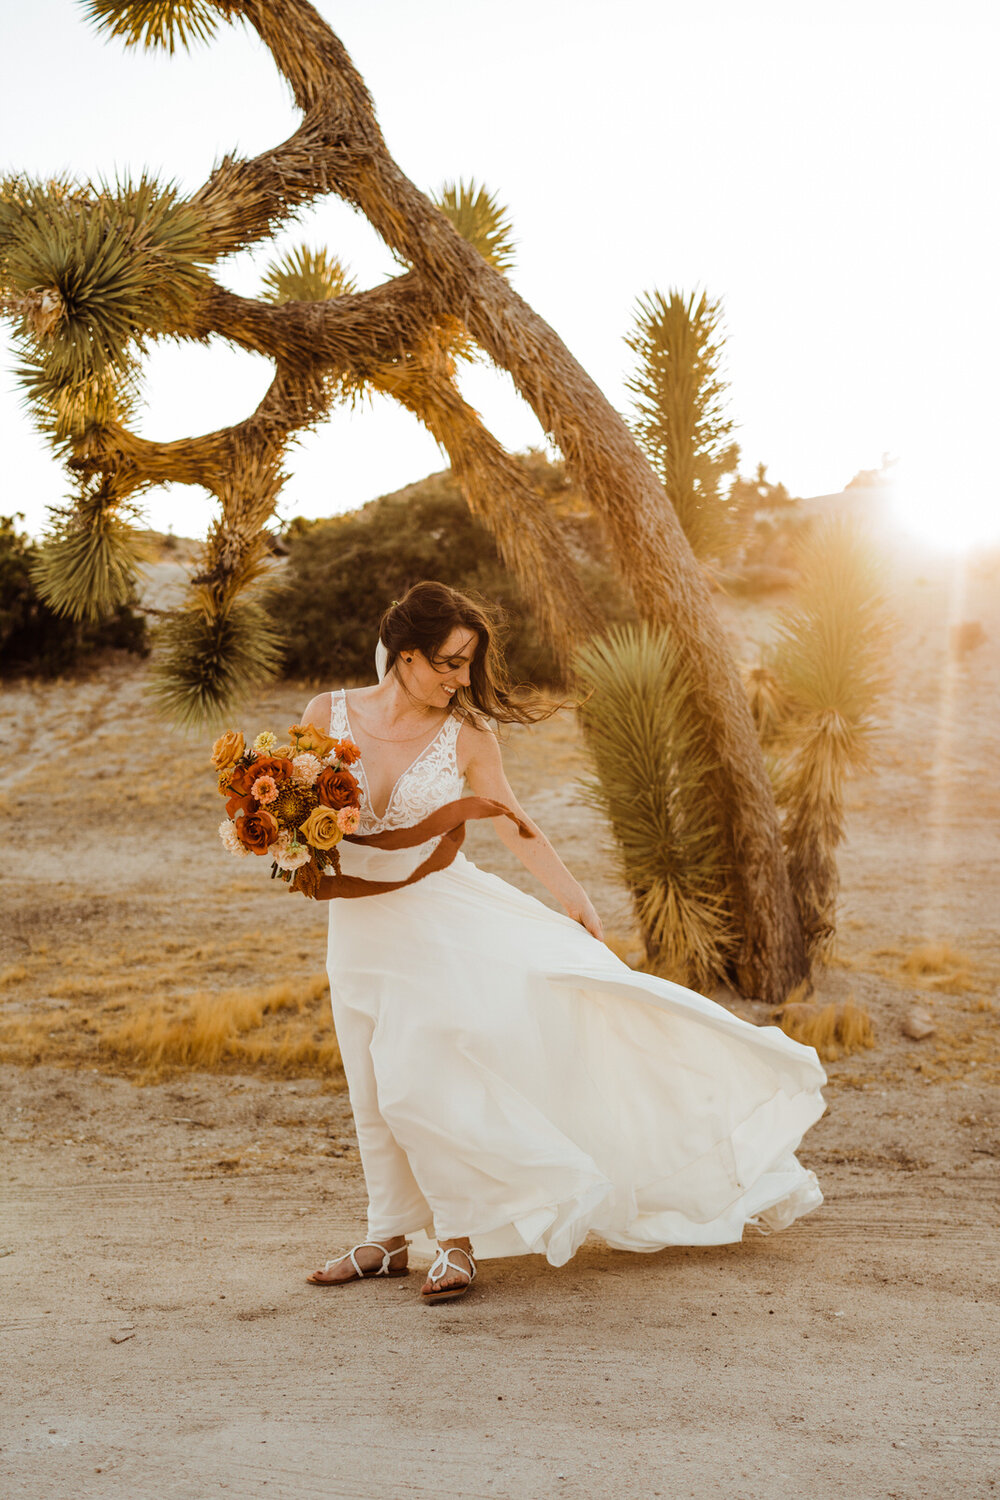 Fall-Wedding-in-Joshua-Tree-Romantic-Sunset-Photos-of-Bride-and-Groom (10).jpg